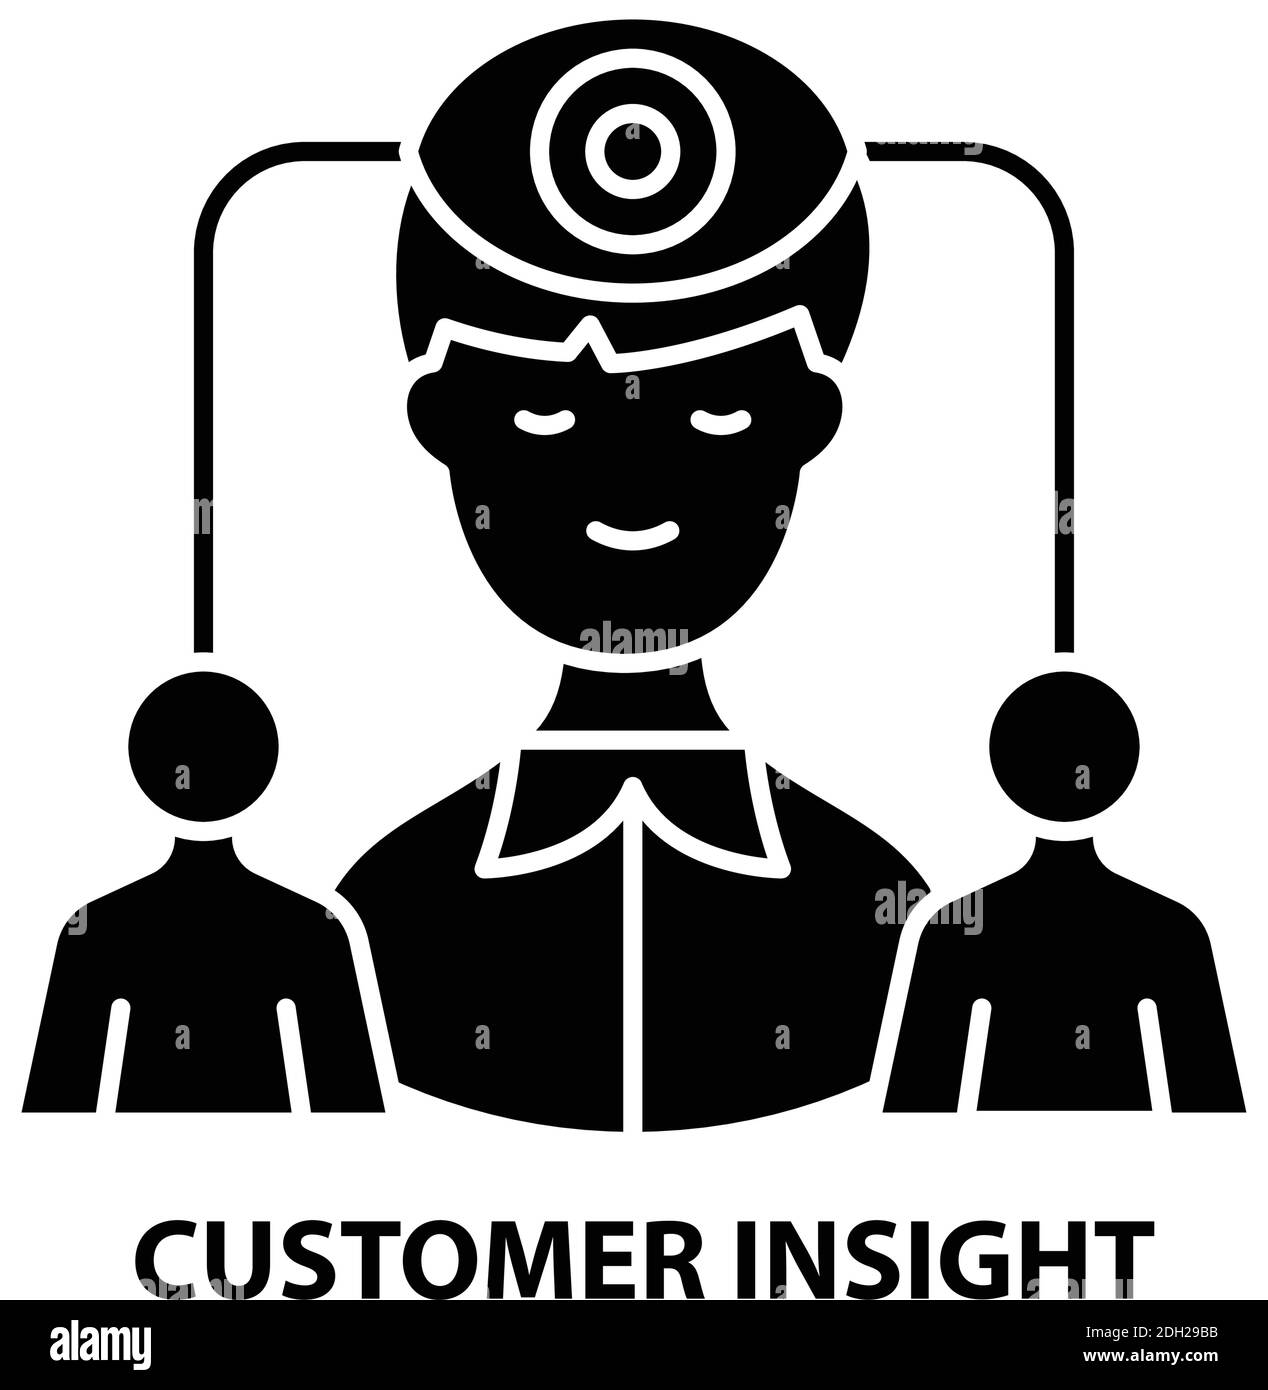 customer insight symbol icon, black vector sign with editable strokes, concept illustration Stock Vector